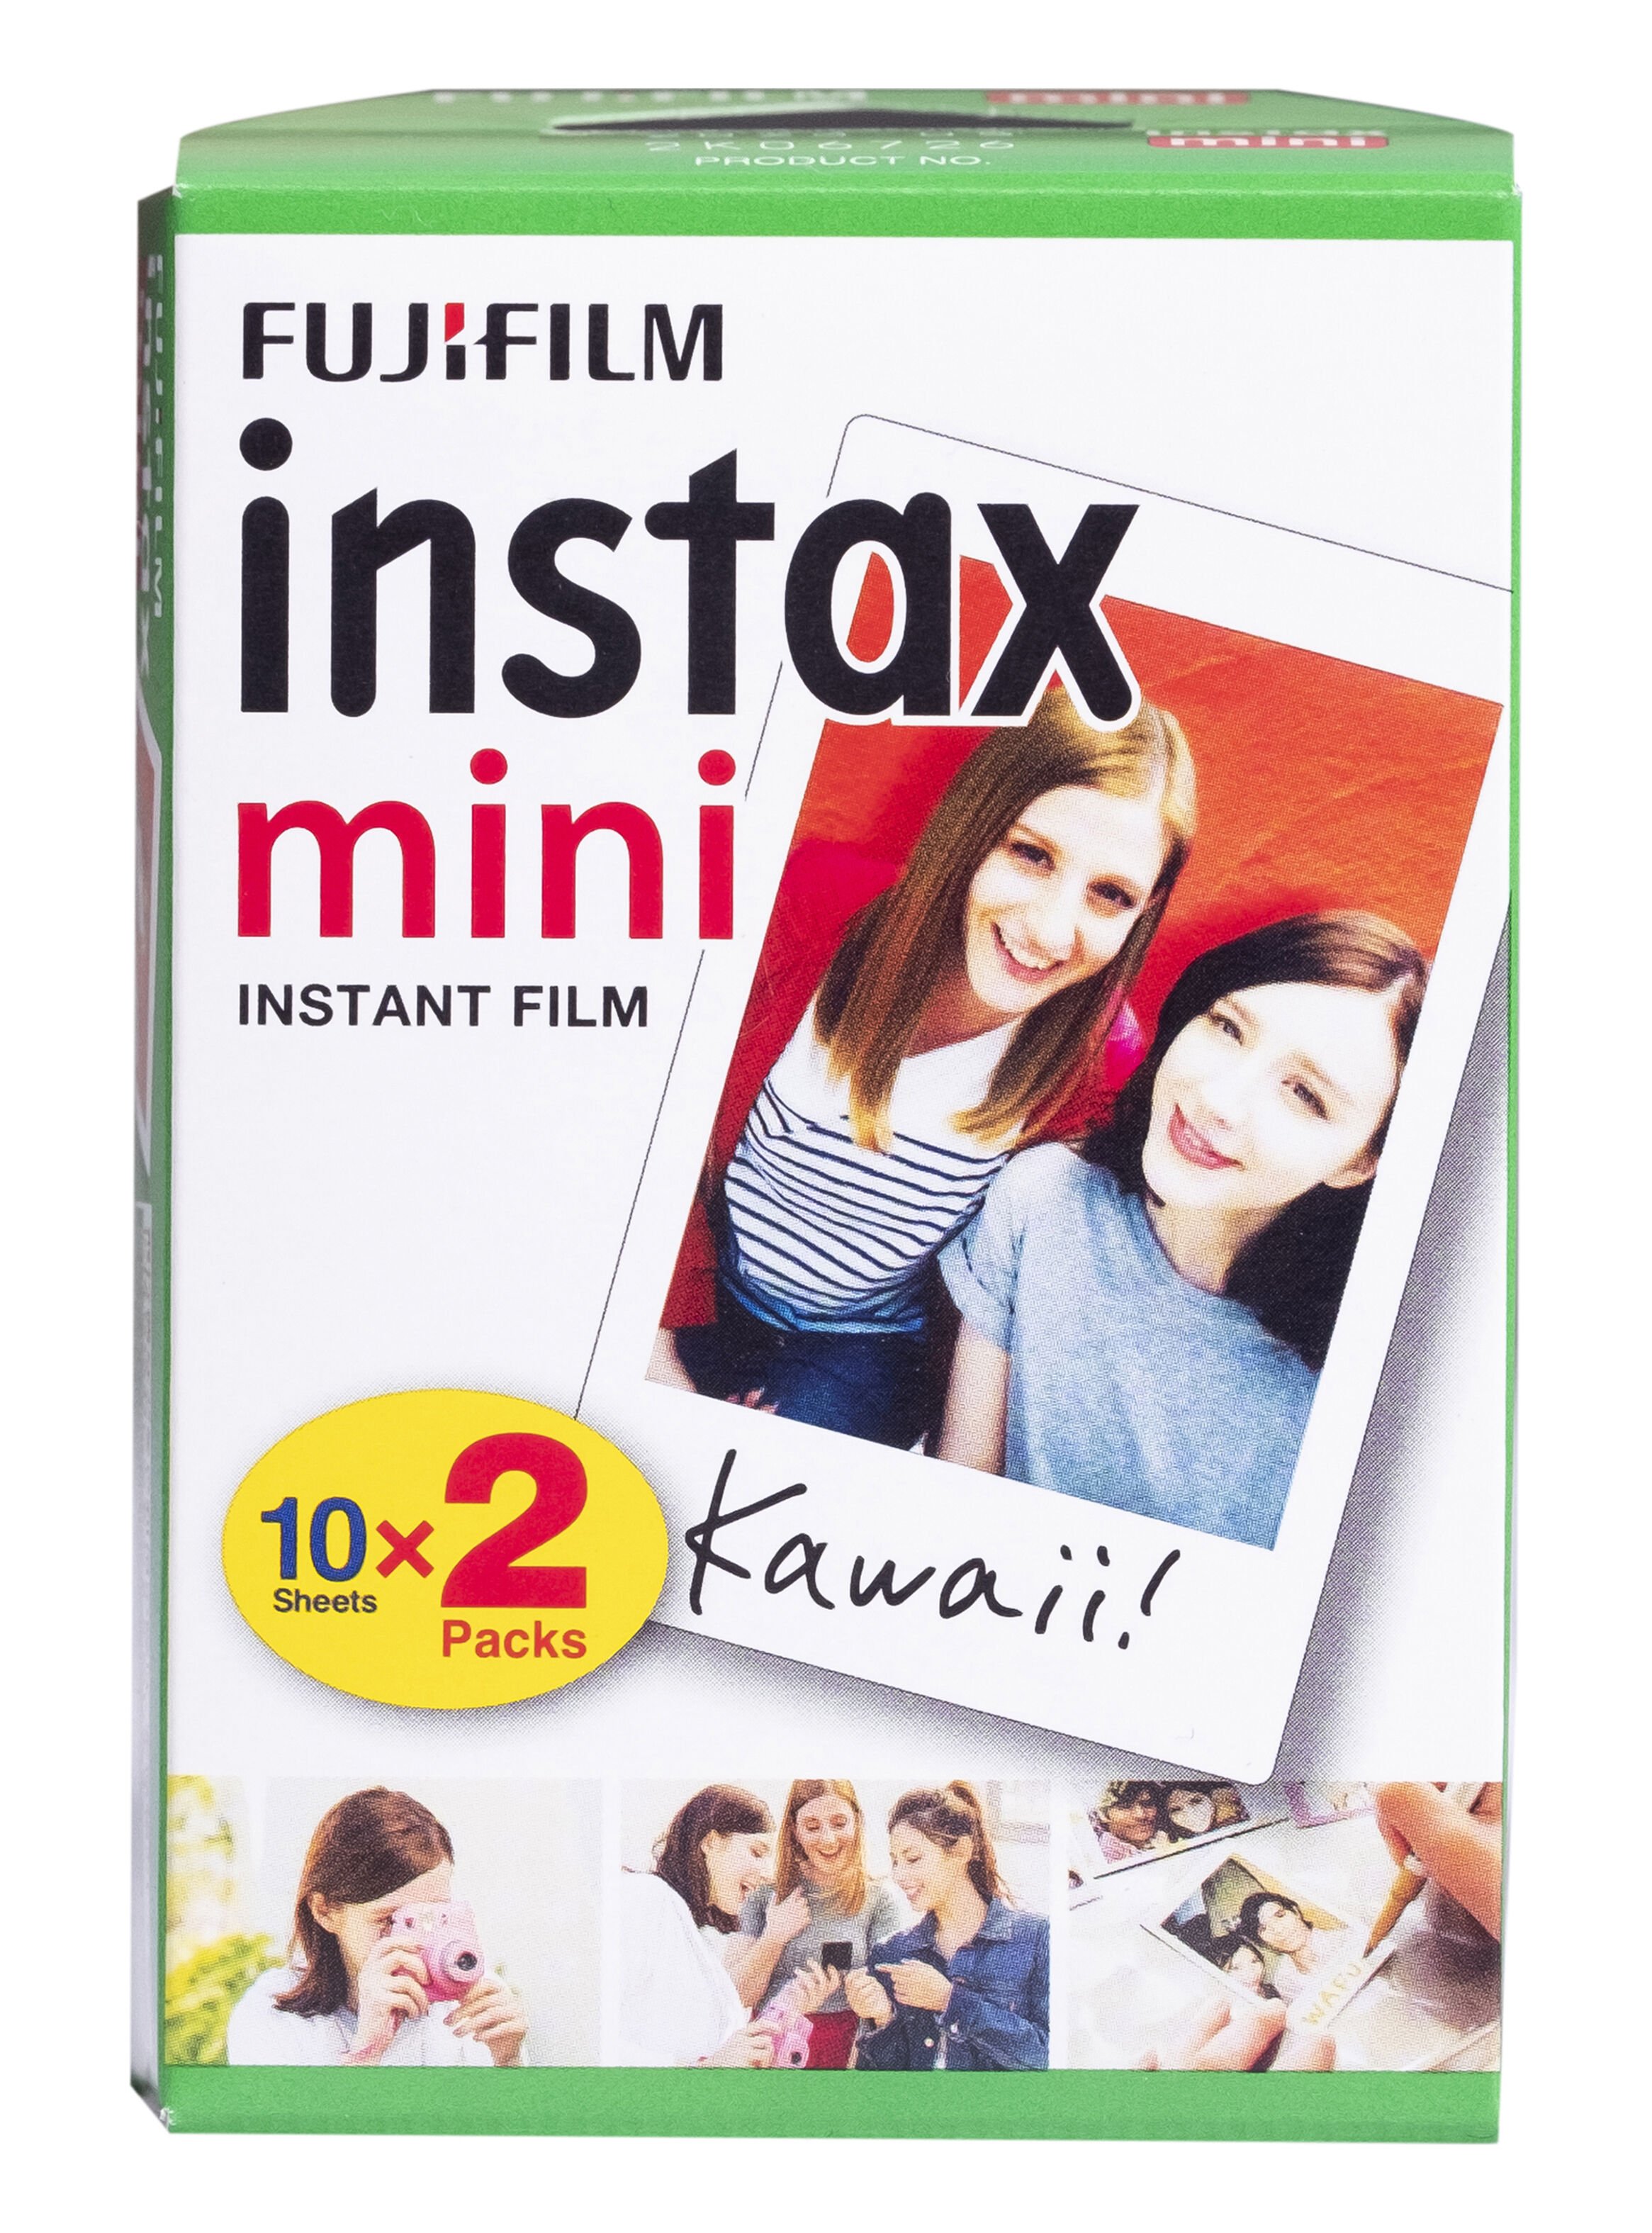 Papel fotográfico fujifilm instax mini x 20 unidades FUJIFILM